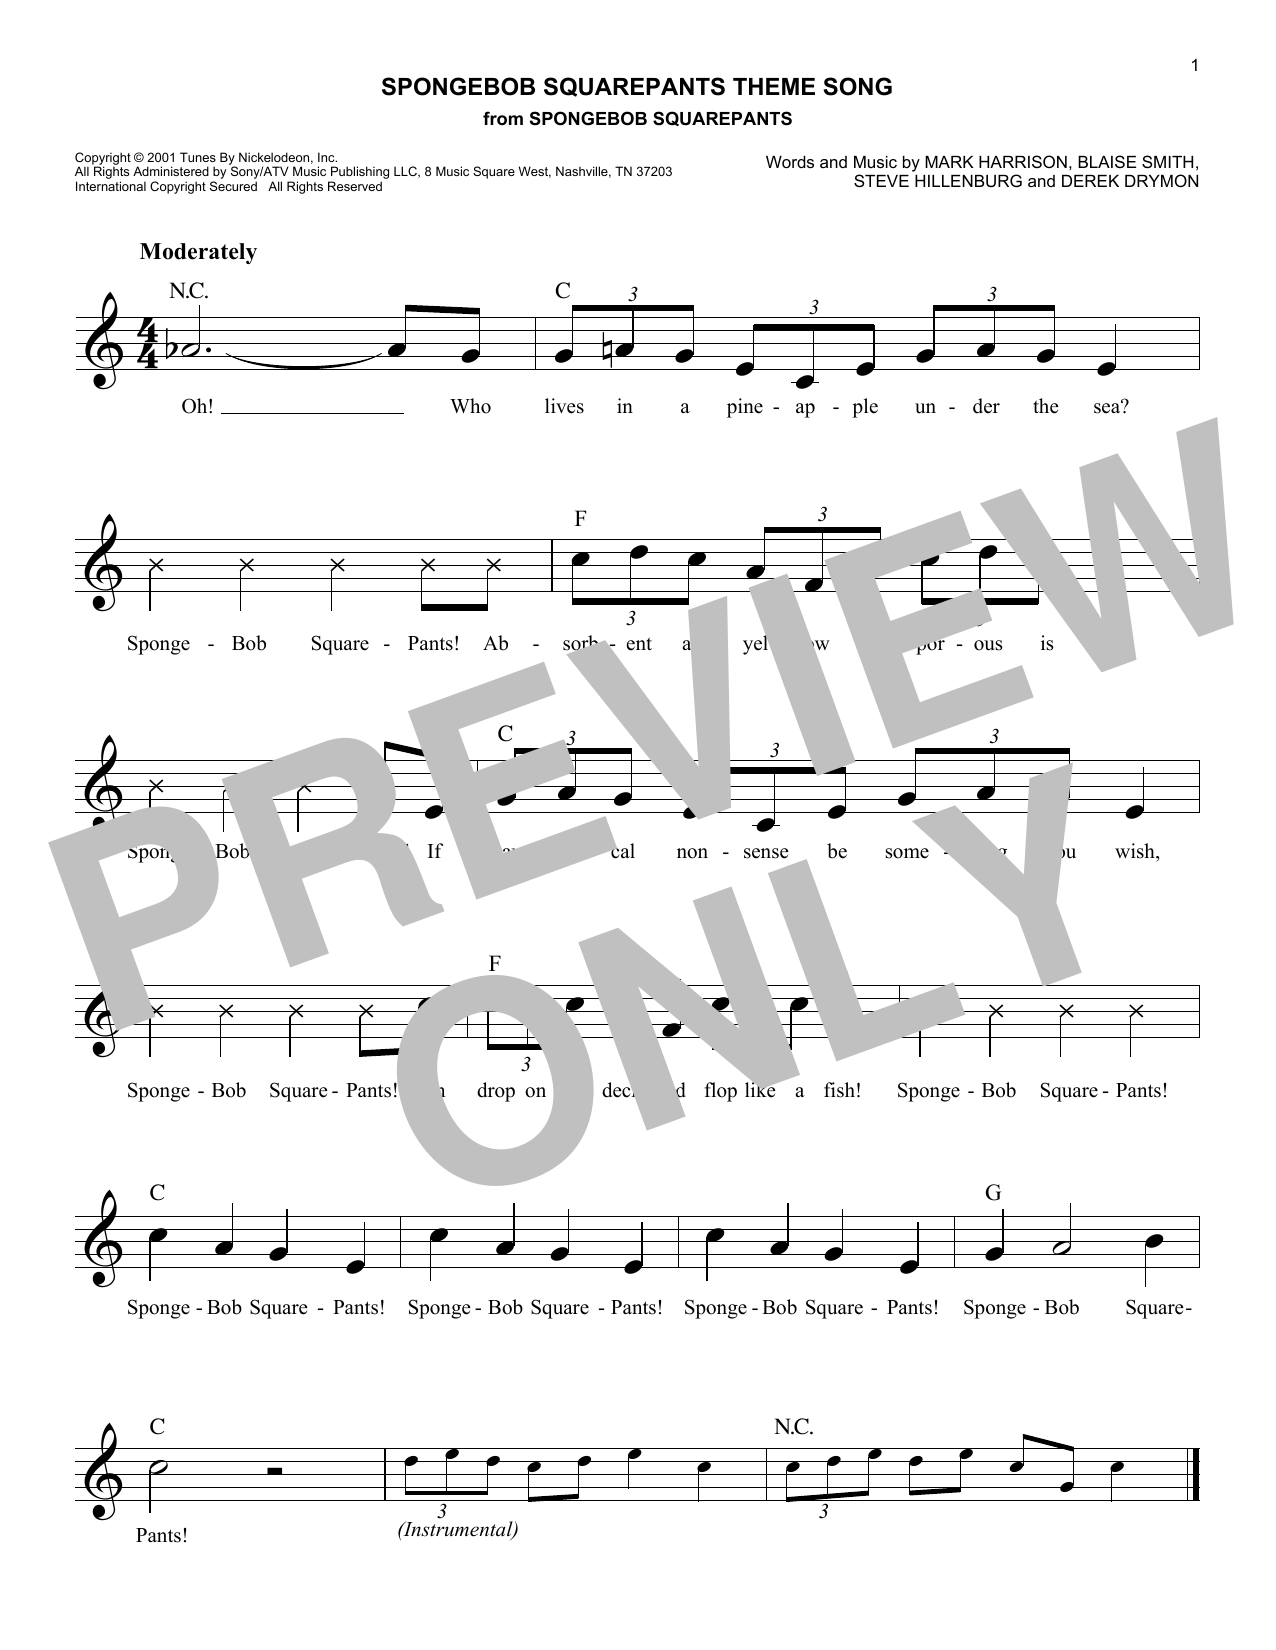 Steve Hillenburg SpongeBob SquarePants Theme Song Sheet Music Notes & Chords for Easy Guitar Tab - Download or Print PDF